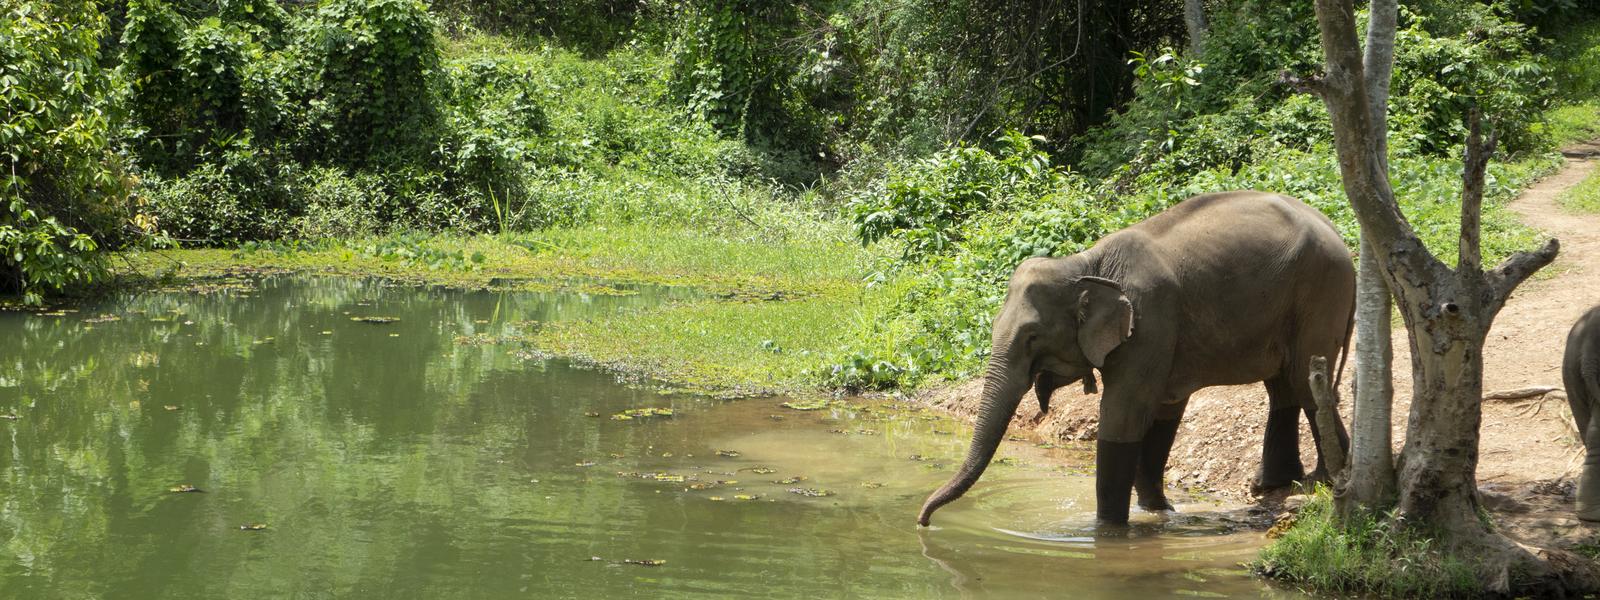 elephant drinking water